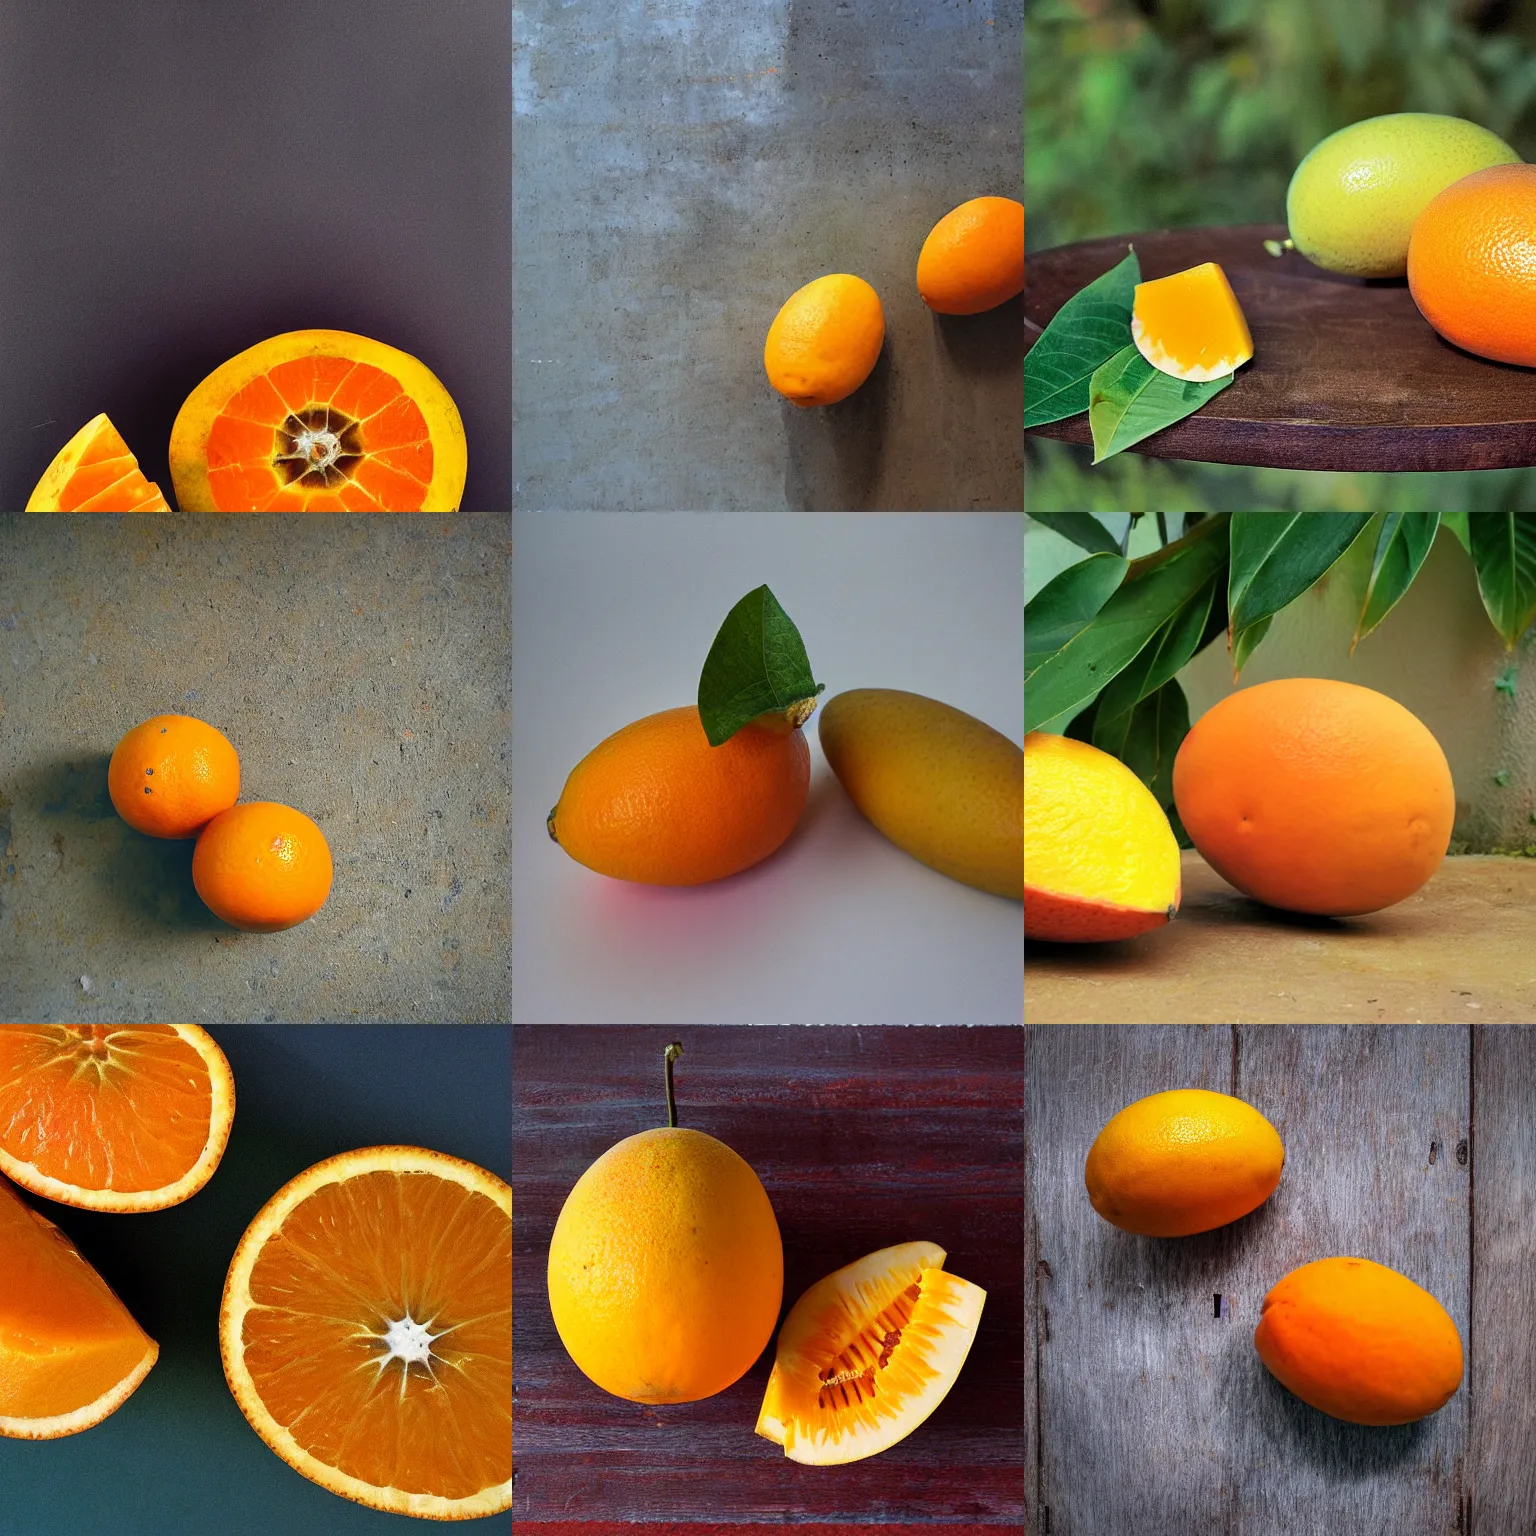 Prompt: Orange and a mango, photograph